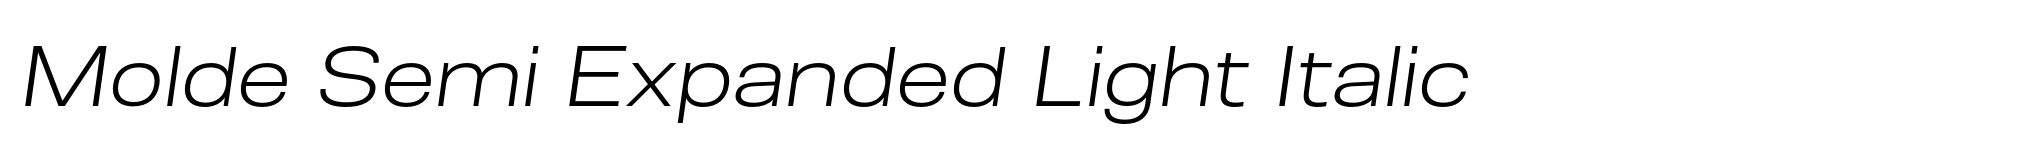 Molde Semi Expanded Light Italic image